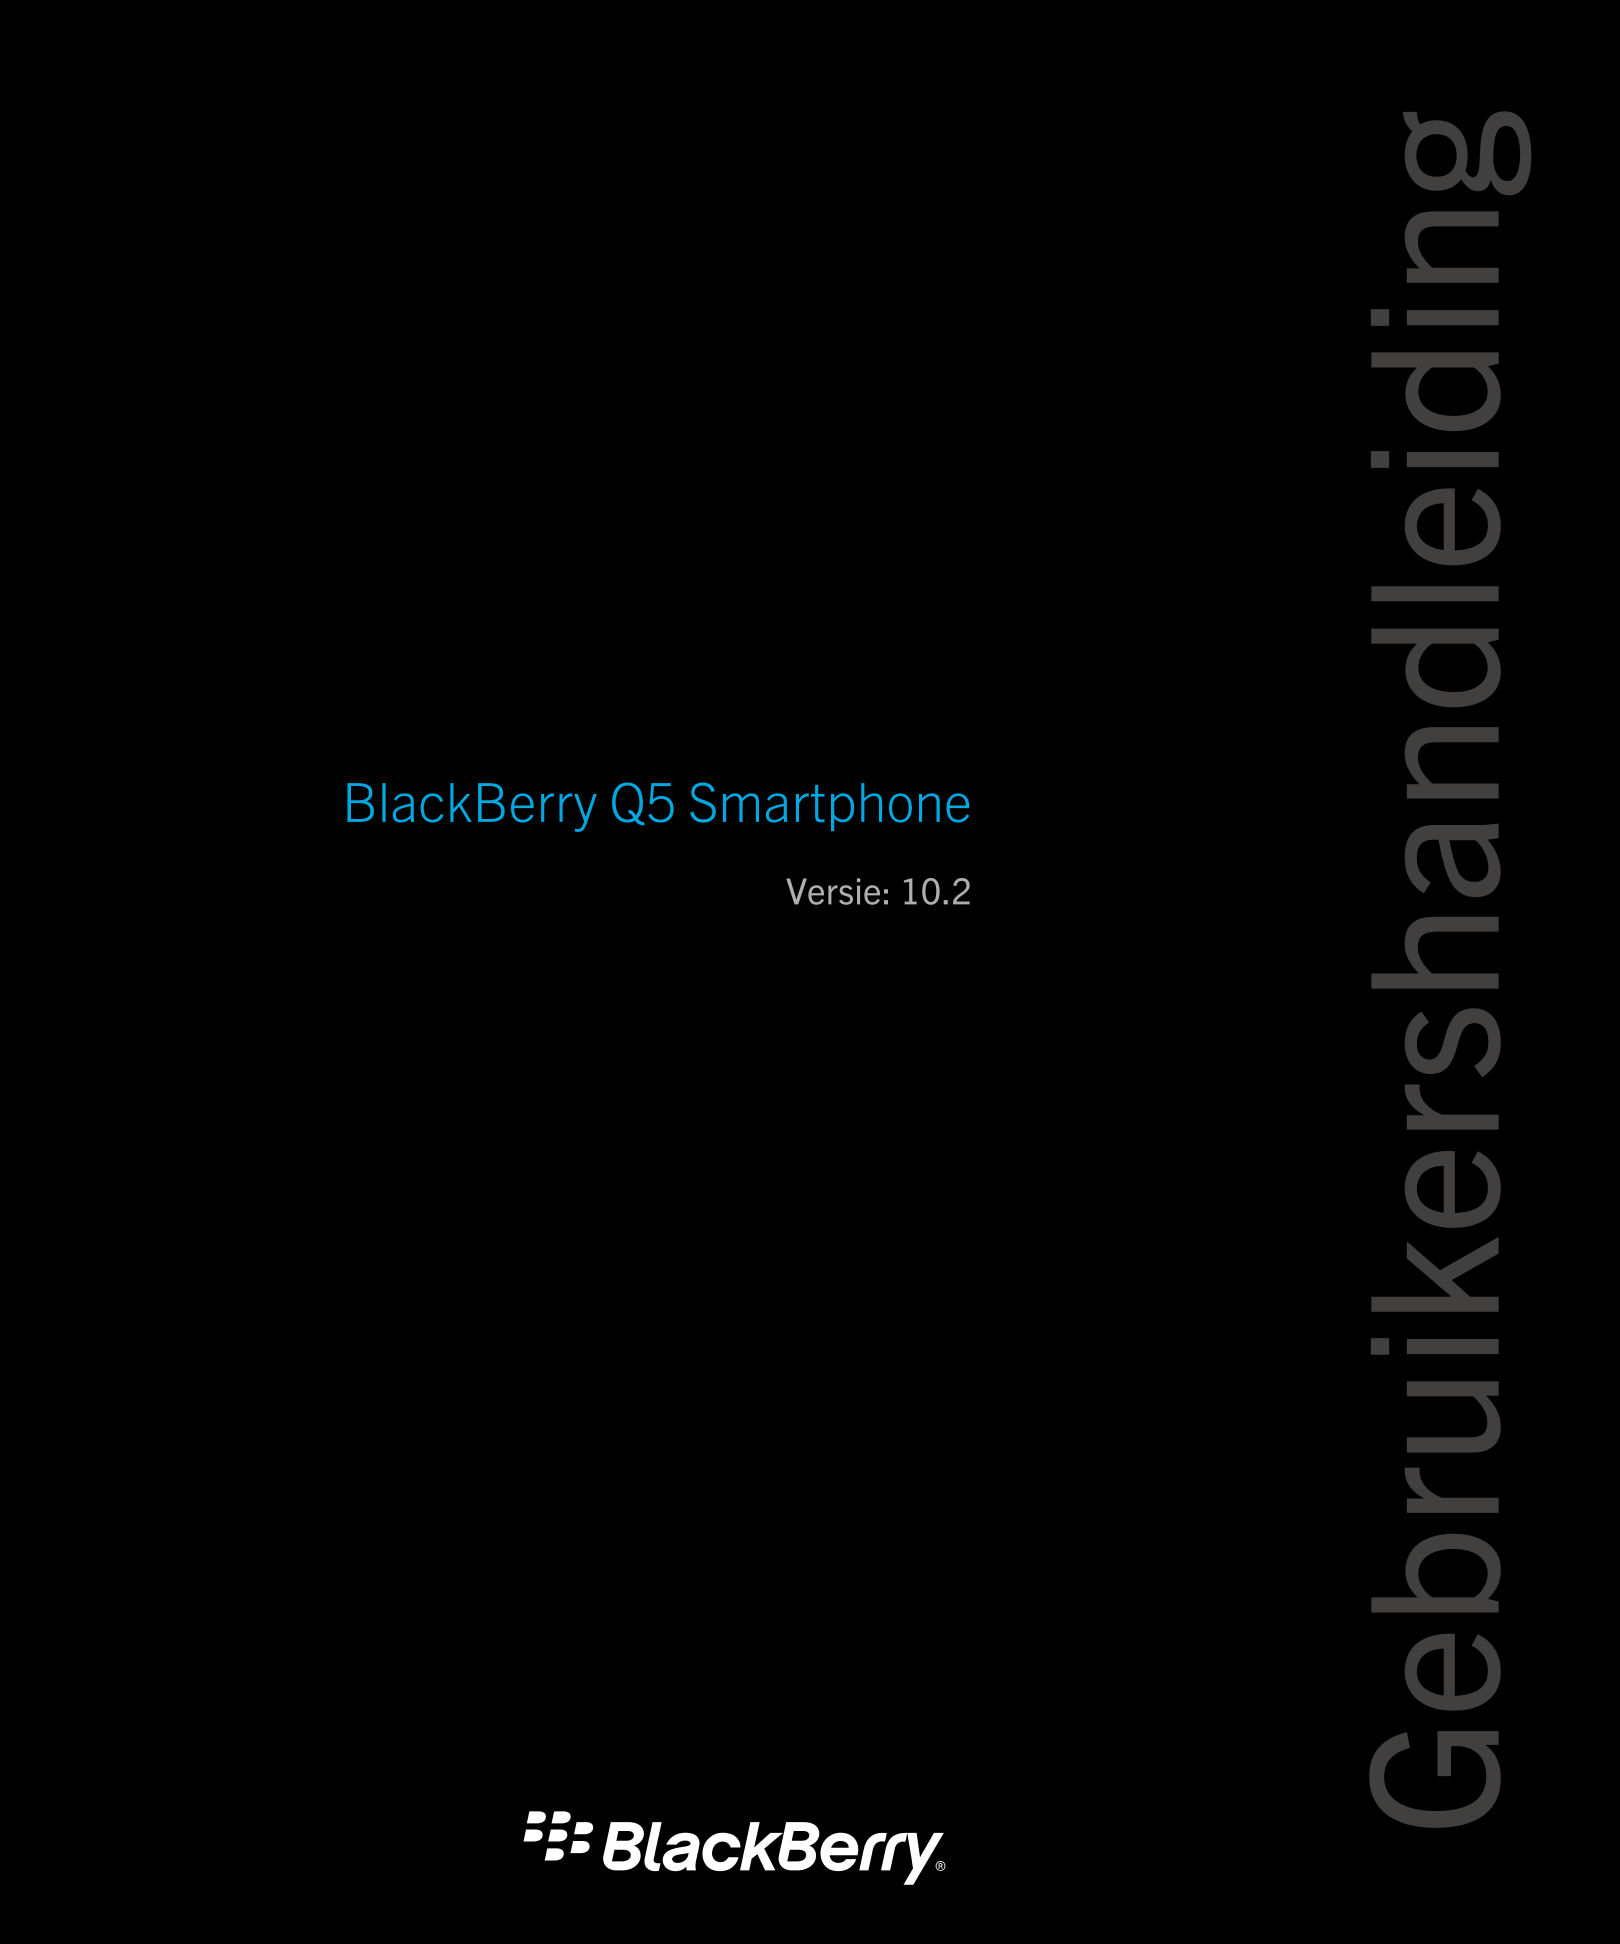 Gebruikershandleiding
BlackBerry Q5 Smartphone
Versie: 10.2